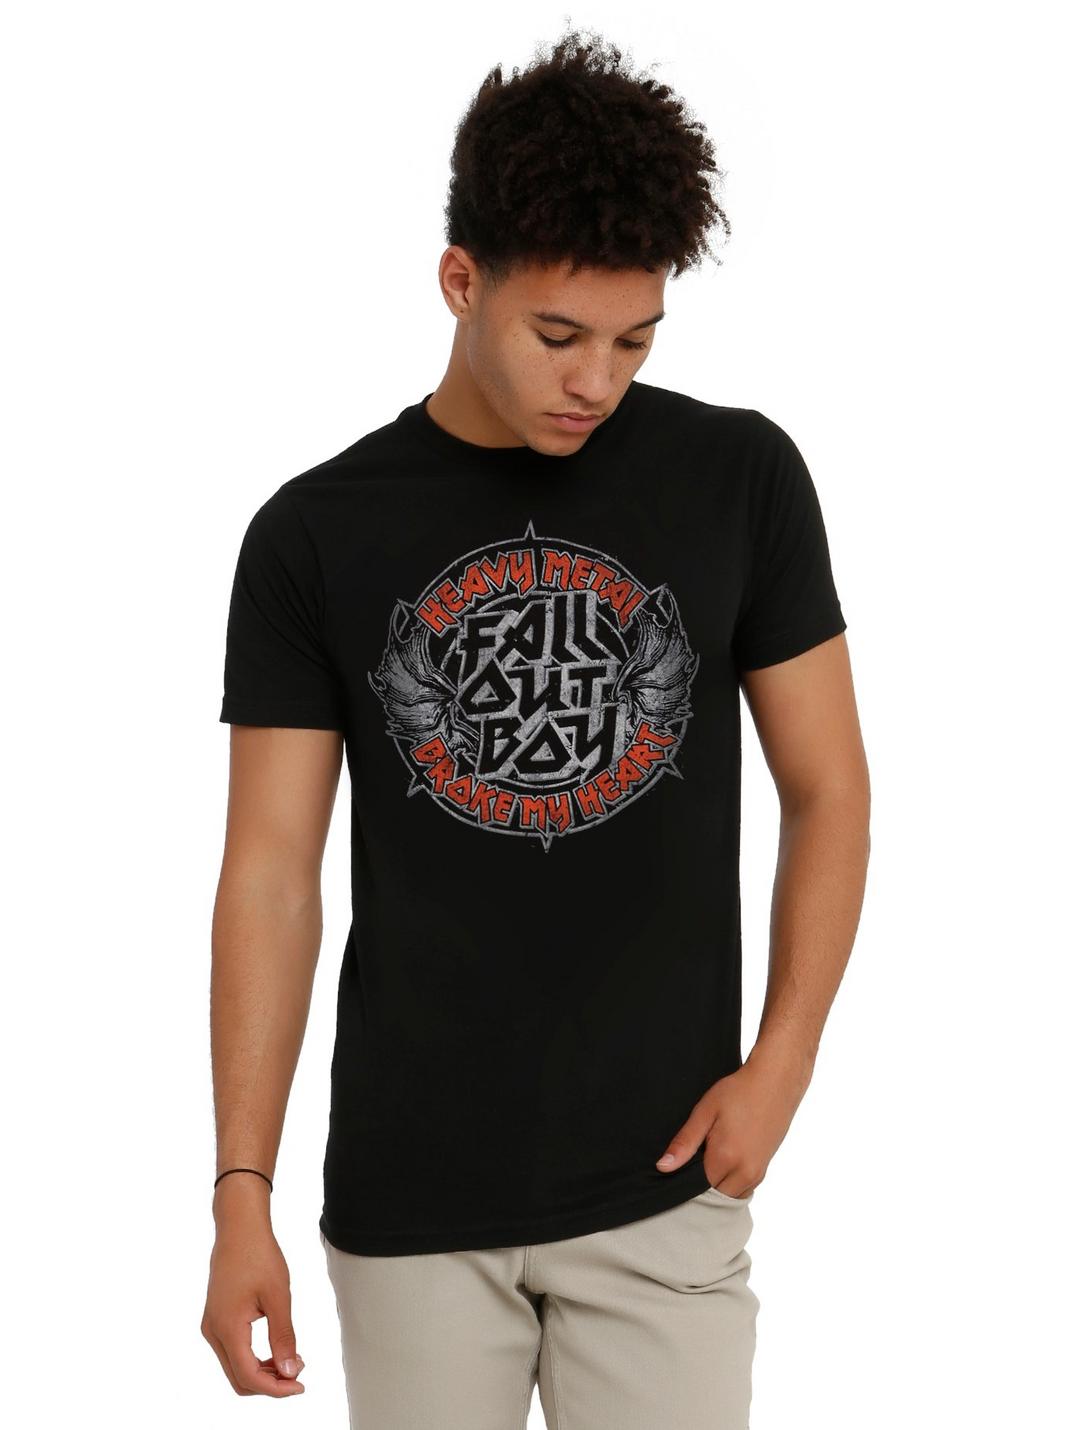 Fall Out Boy Heavy Metal Broke My Heart T-Shirt | Hot Topic